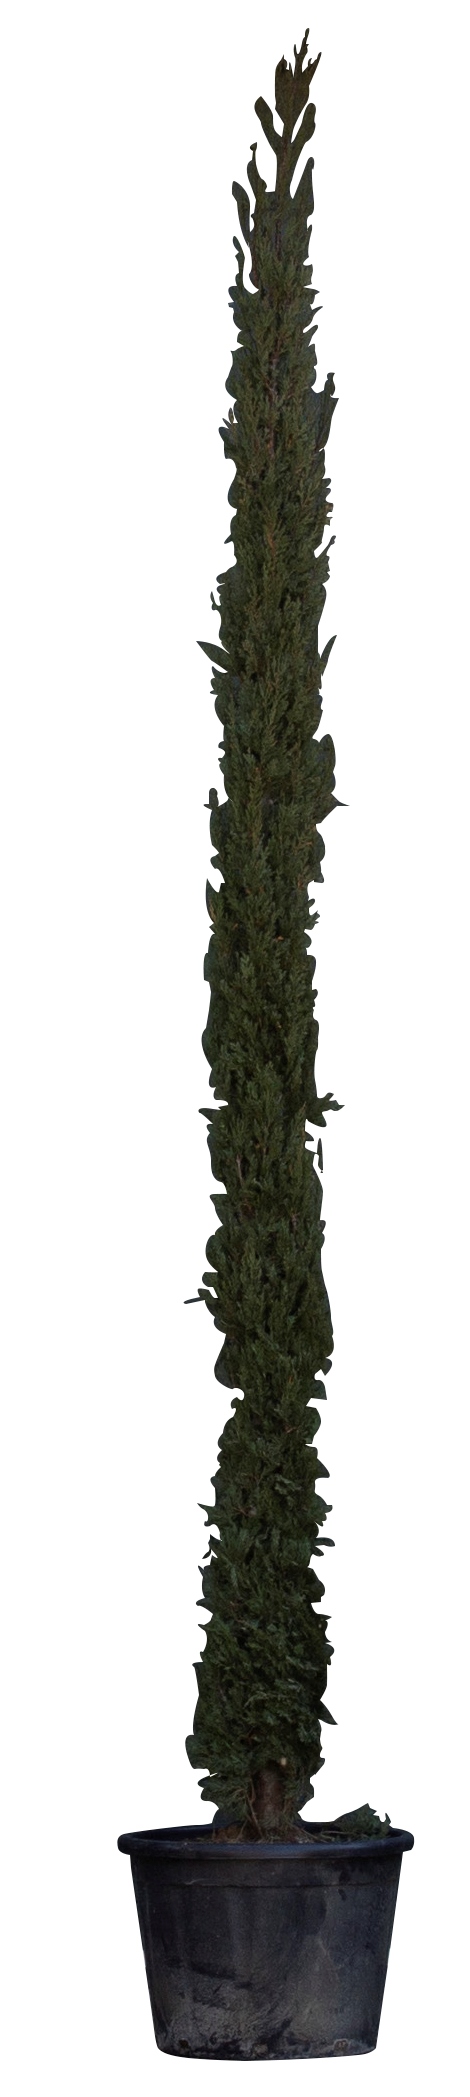 Italiaanse cipresboom - 'Cupressus sempr. 'Pyramidalis' 300-350 cm totaalhoogte